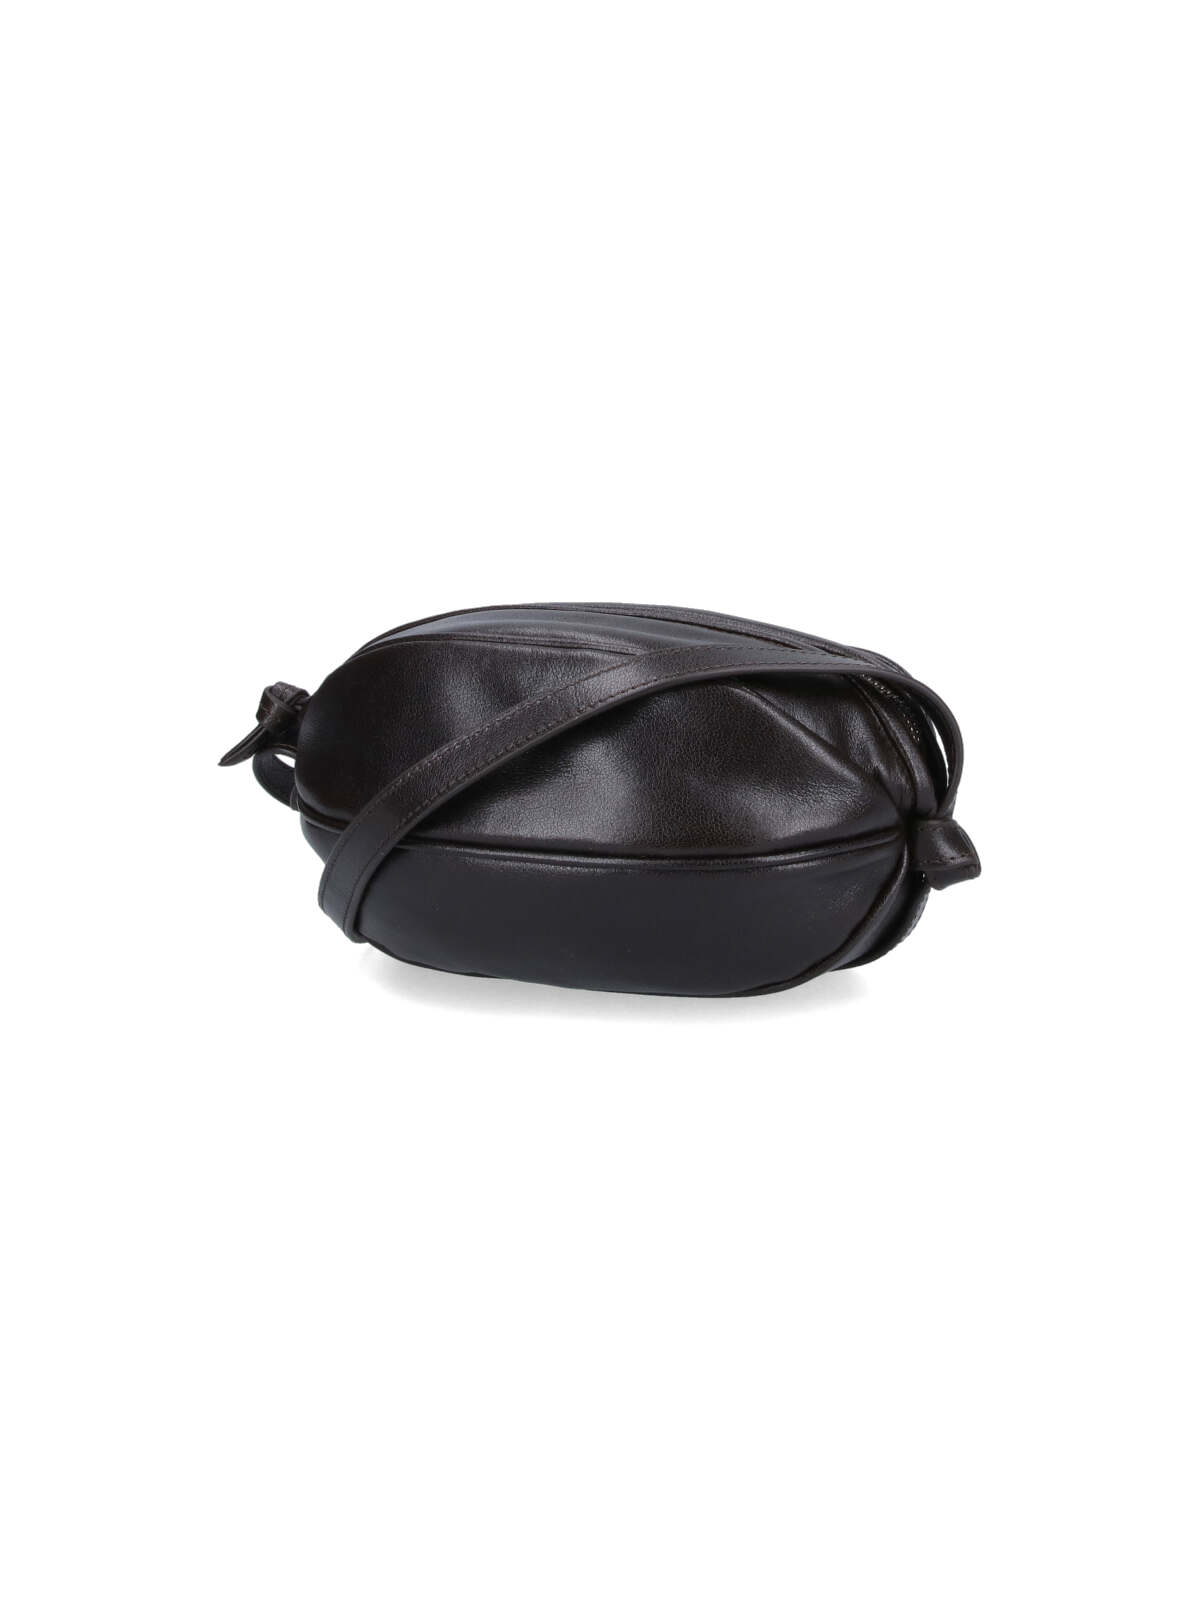 Shop HEREU Canvas Plain Shoulder Bags (WBS22LLIN002) by alto-corp